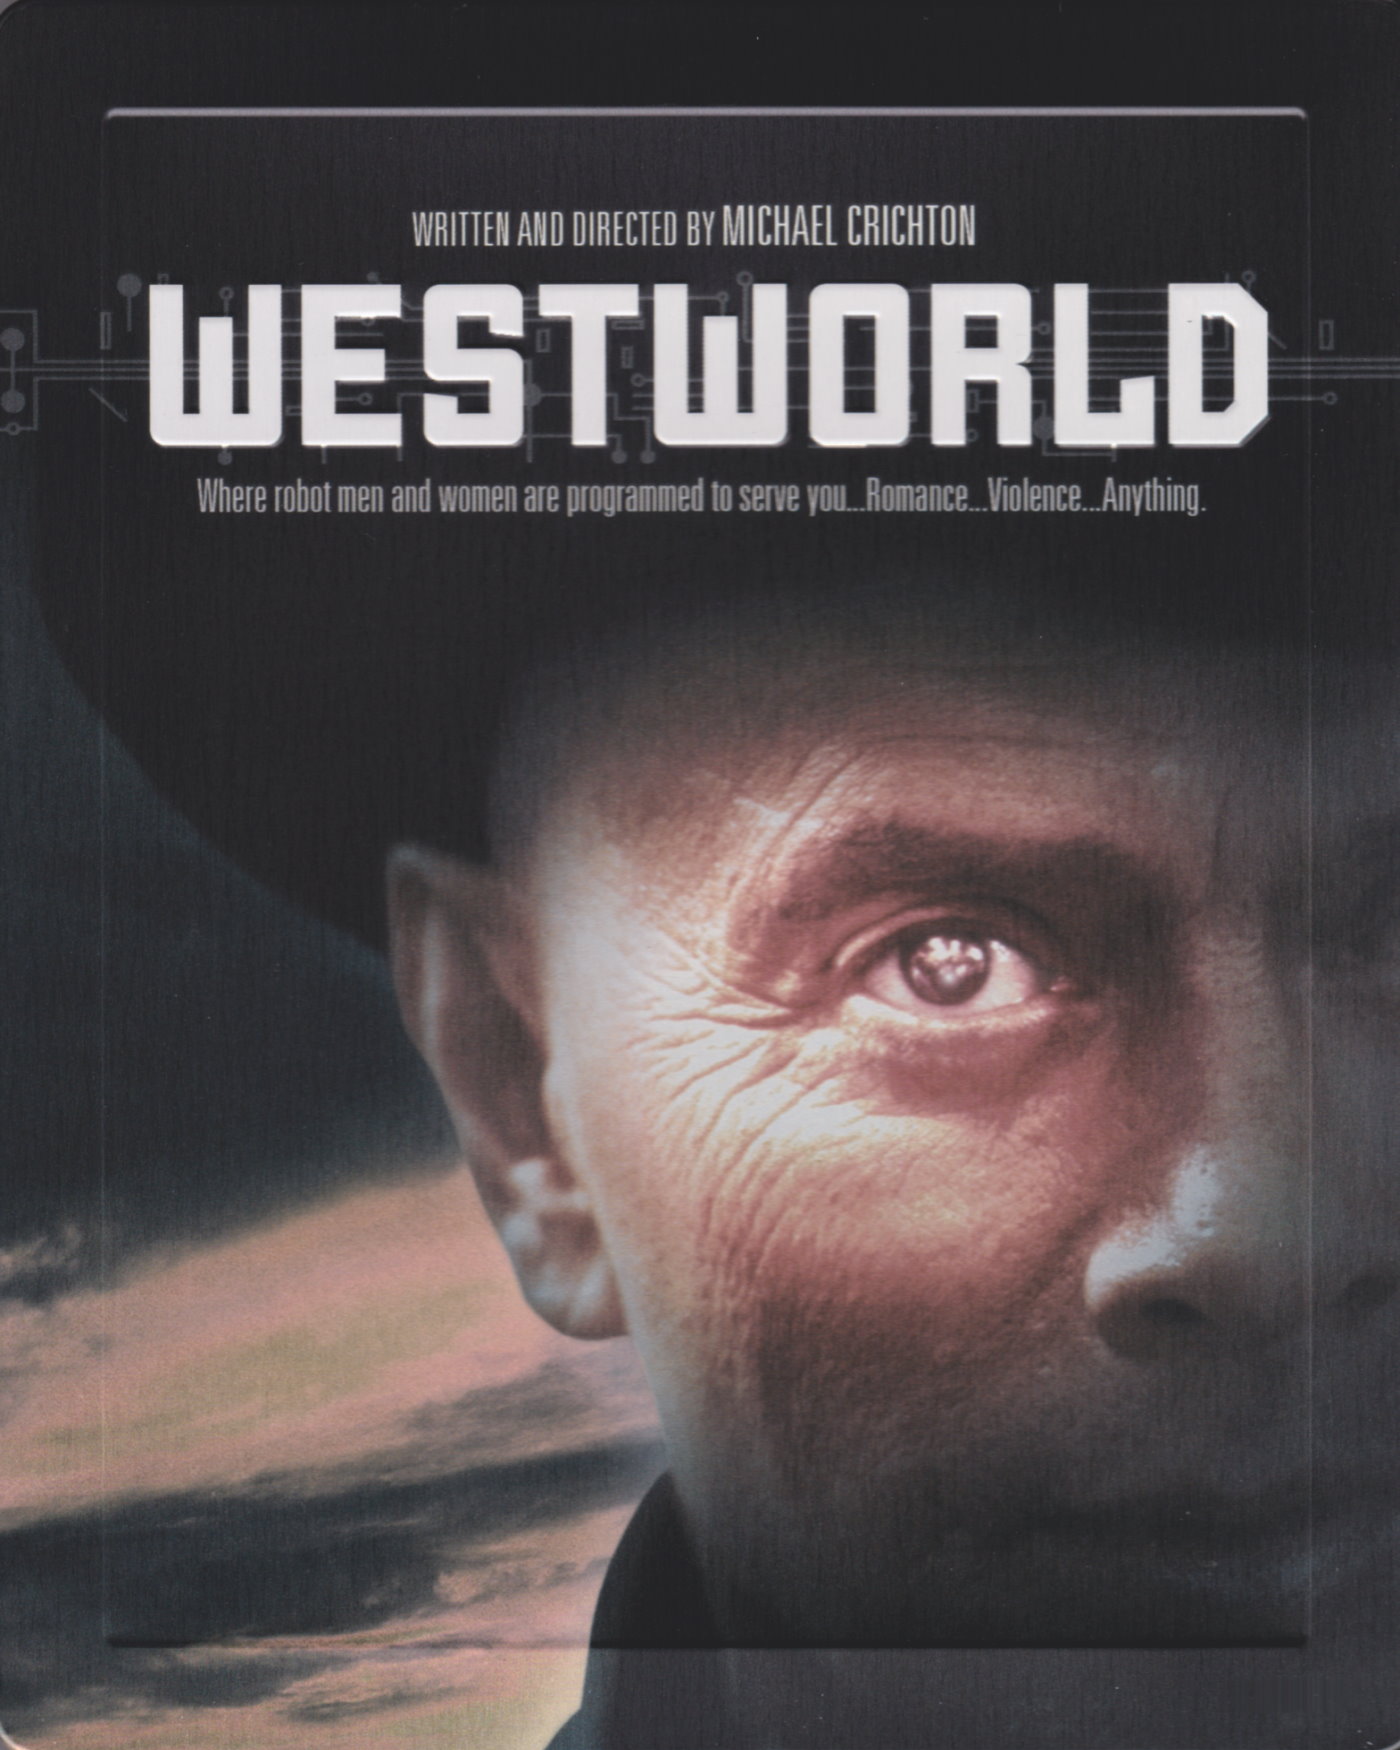 Cover - Westworld.jpg